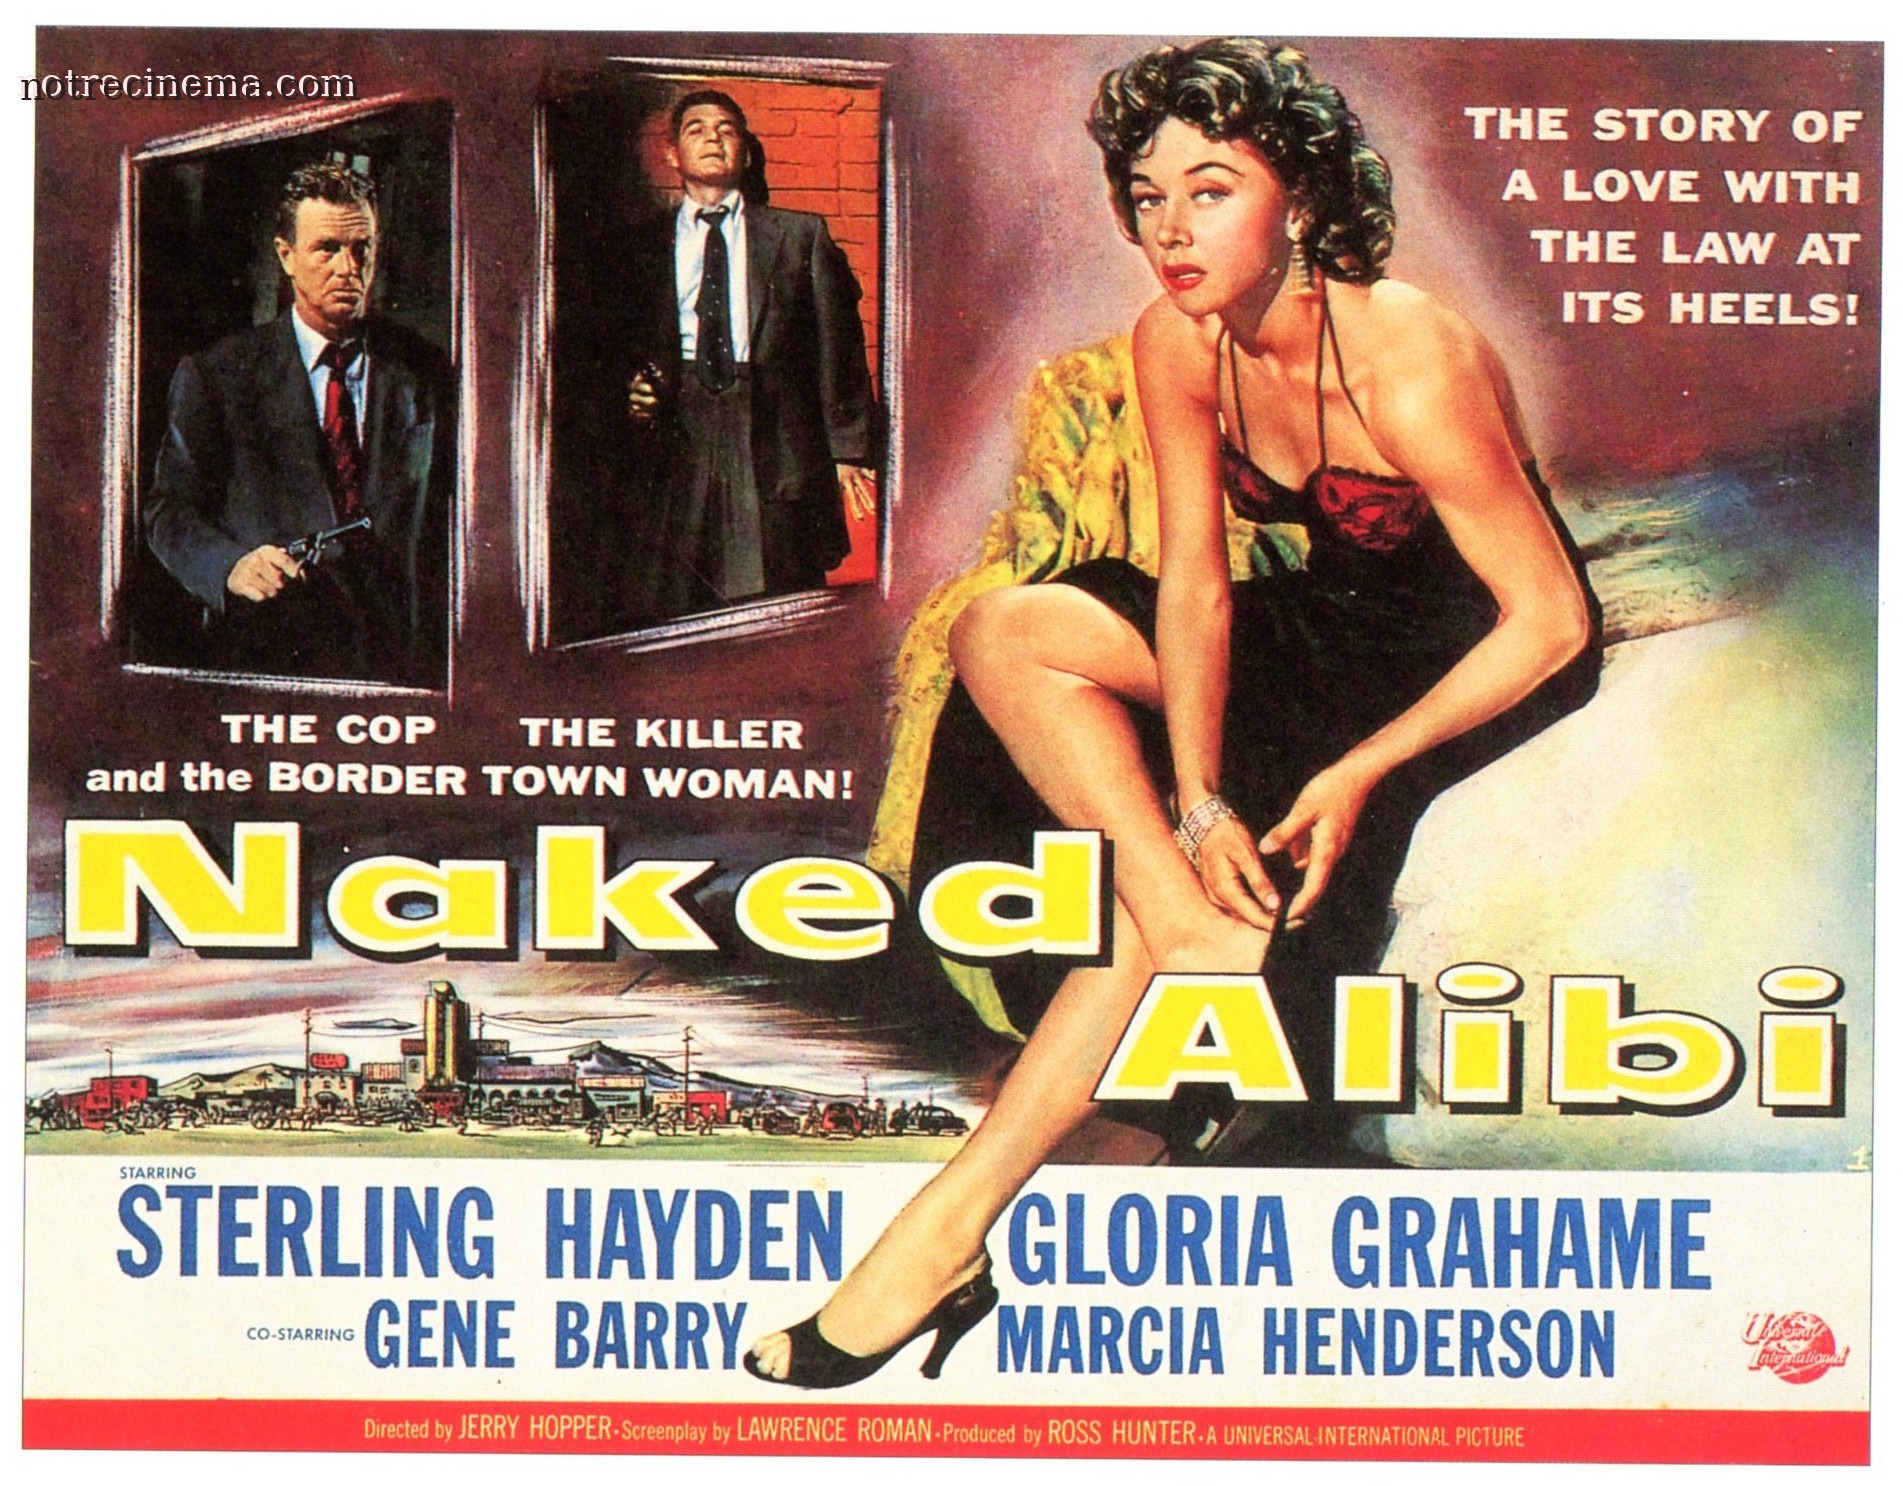 Naked alibi (1954)